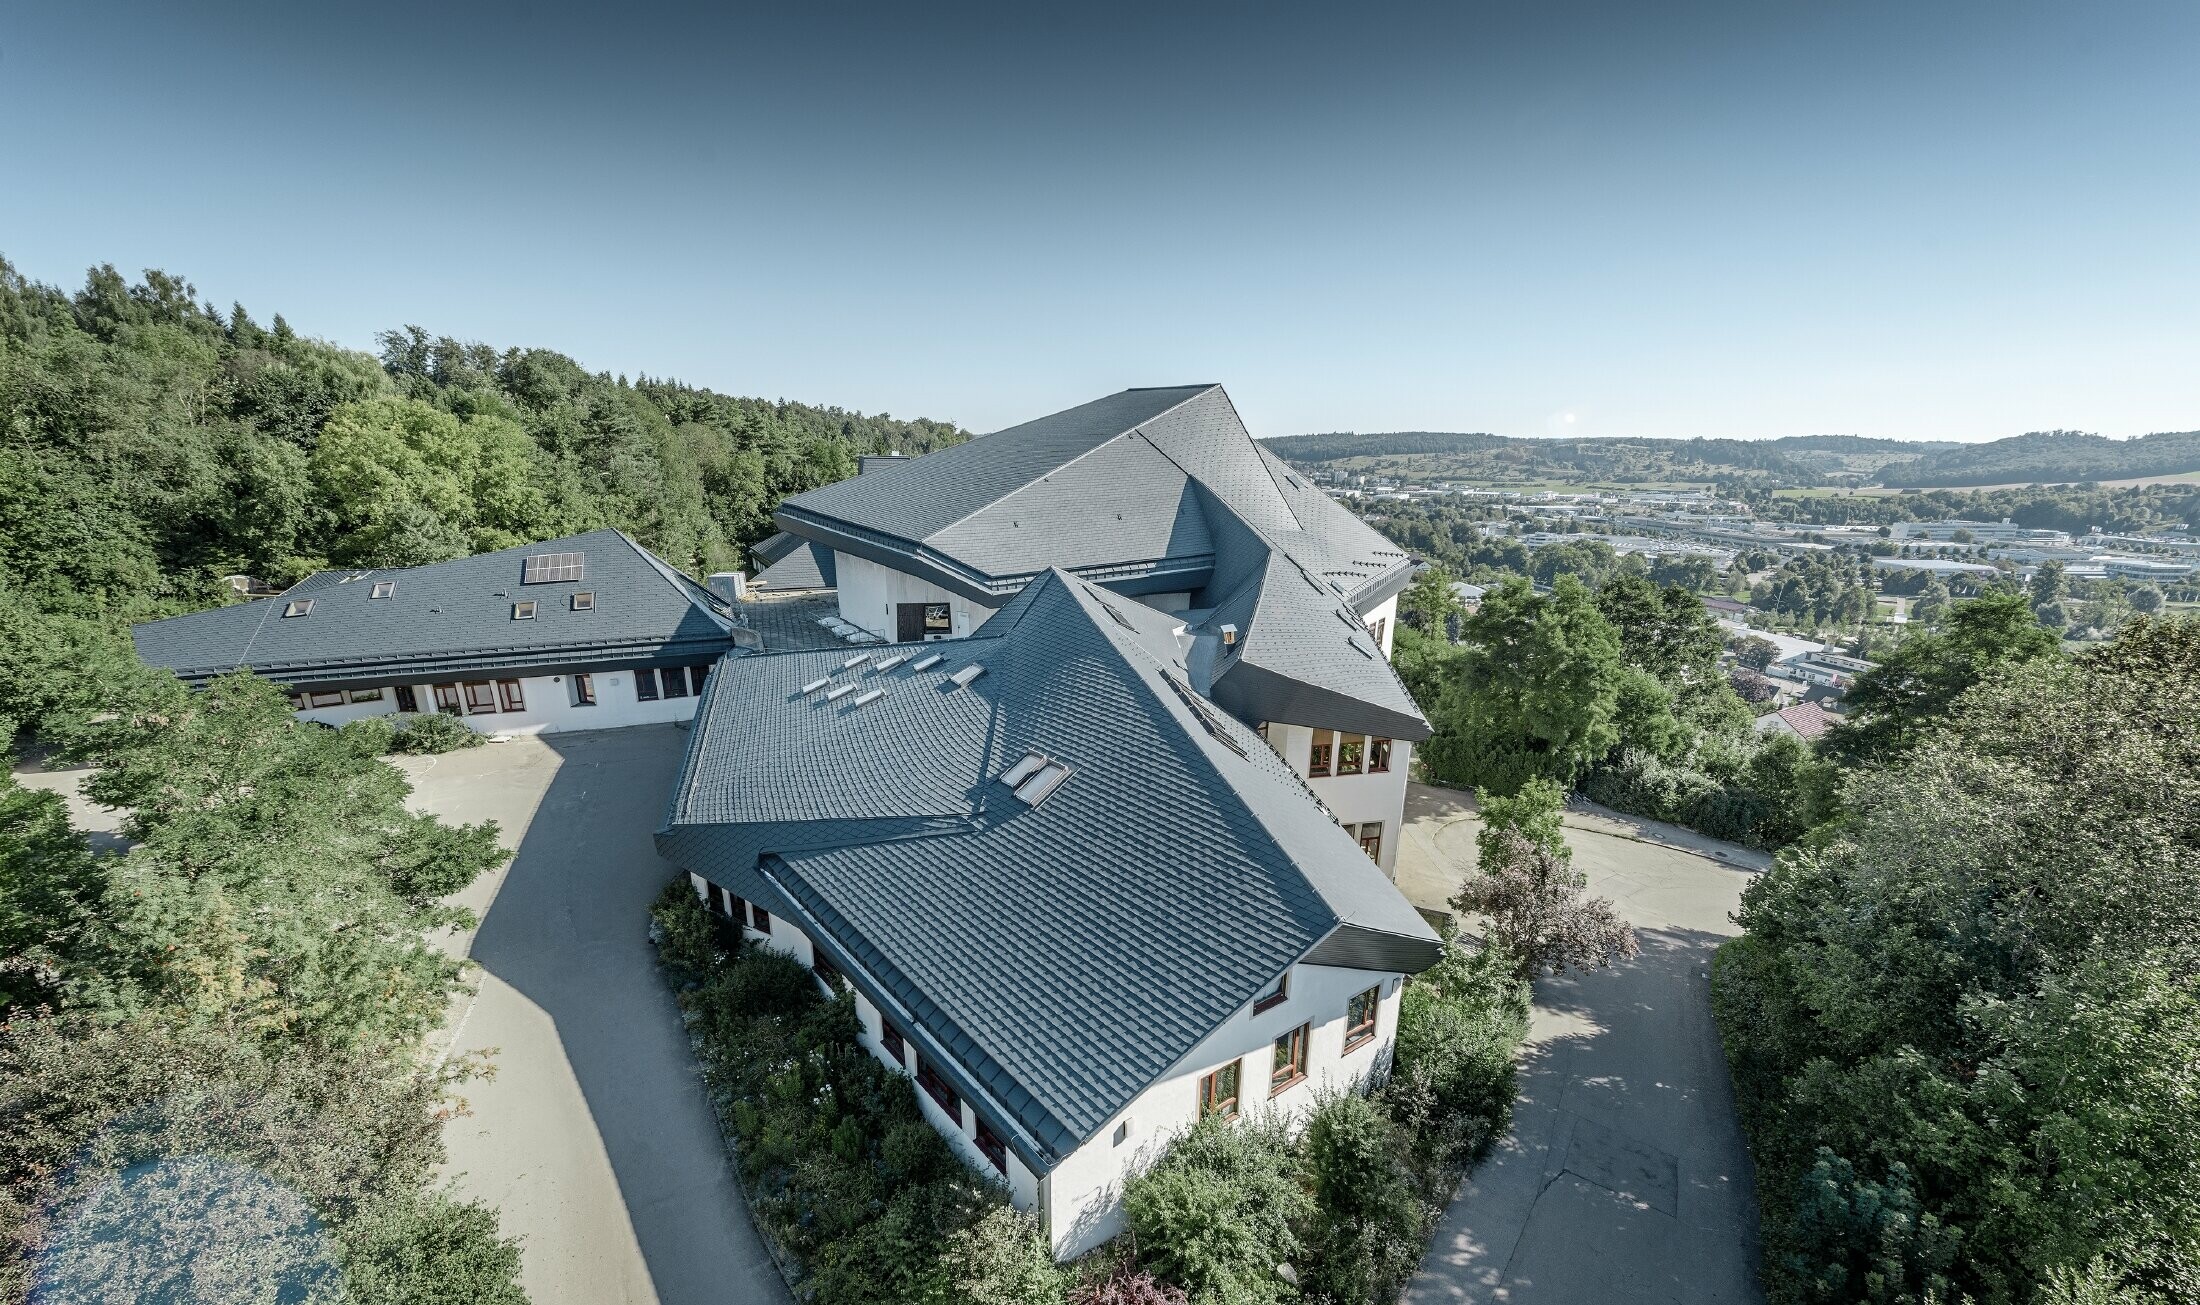 Waldorfska škola u Heidenheimu s novosaniranim krovom, velika krovna površina s mnogo kuteva i krovnih nagiba pokrivena je PREFA krovnom šindrom u antracit boji